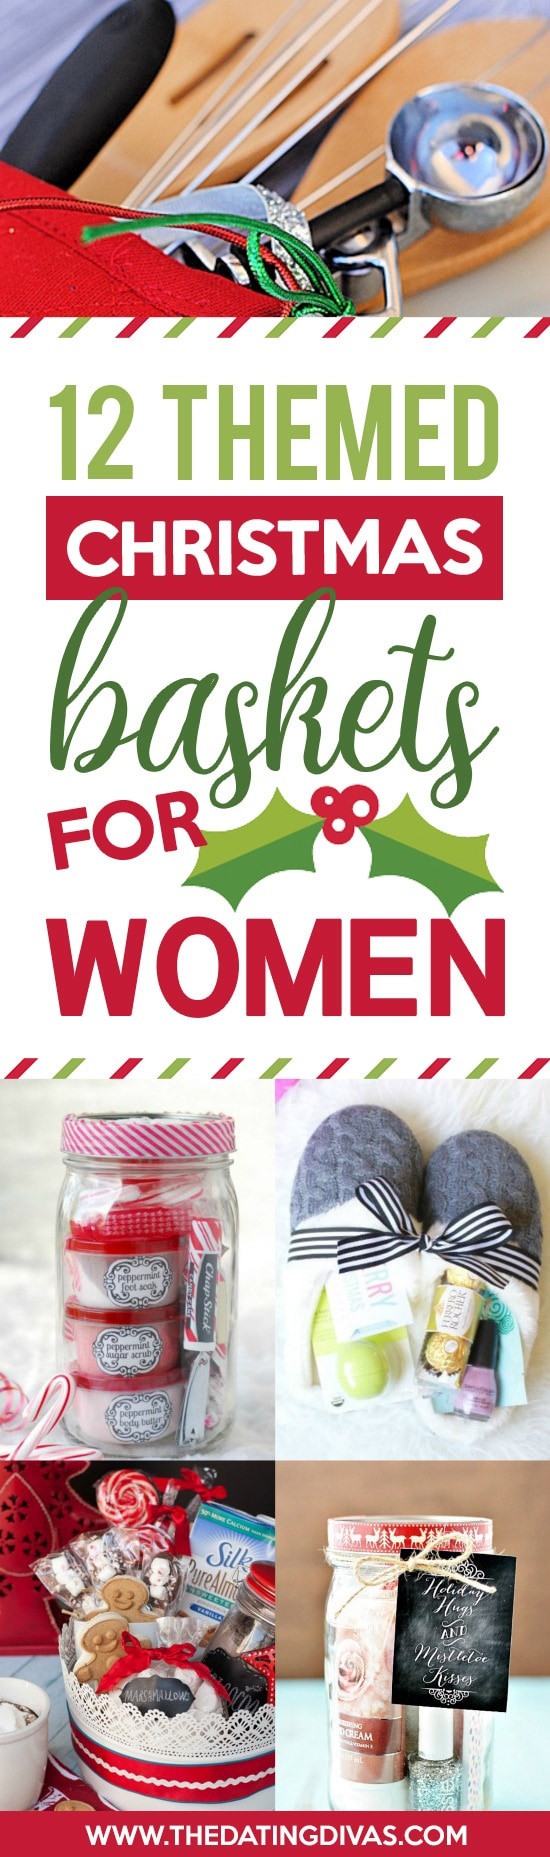 Gift Baskets Ideas For Women
 50 Themed Christmas Basket Ideas The Dating Divas